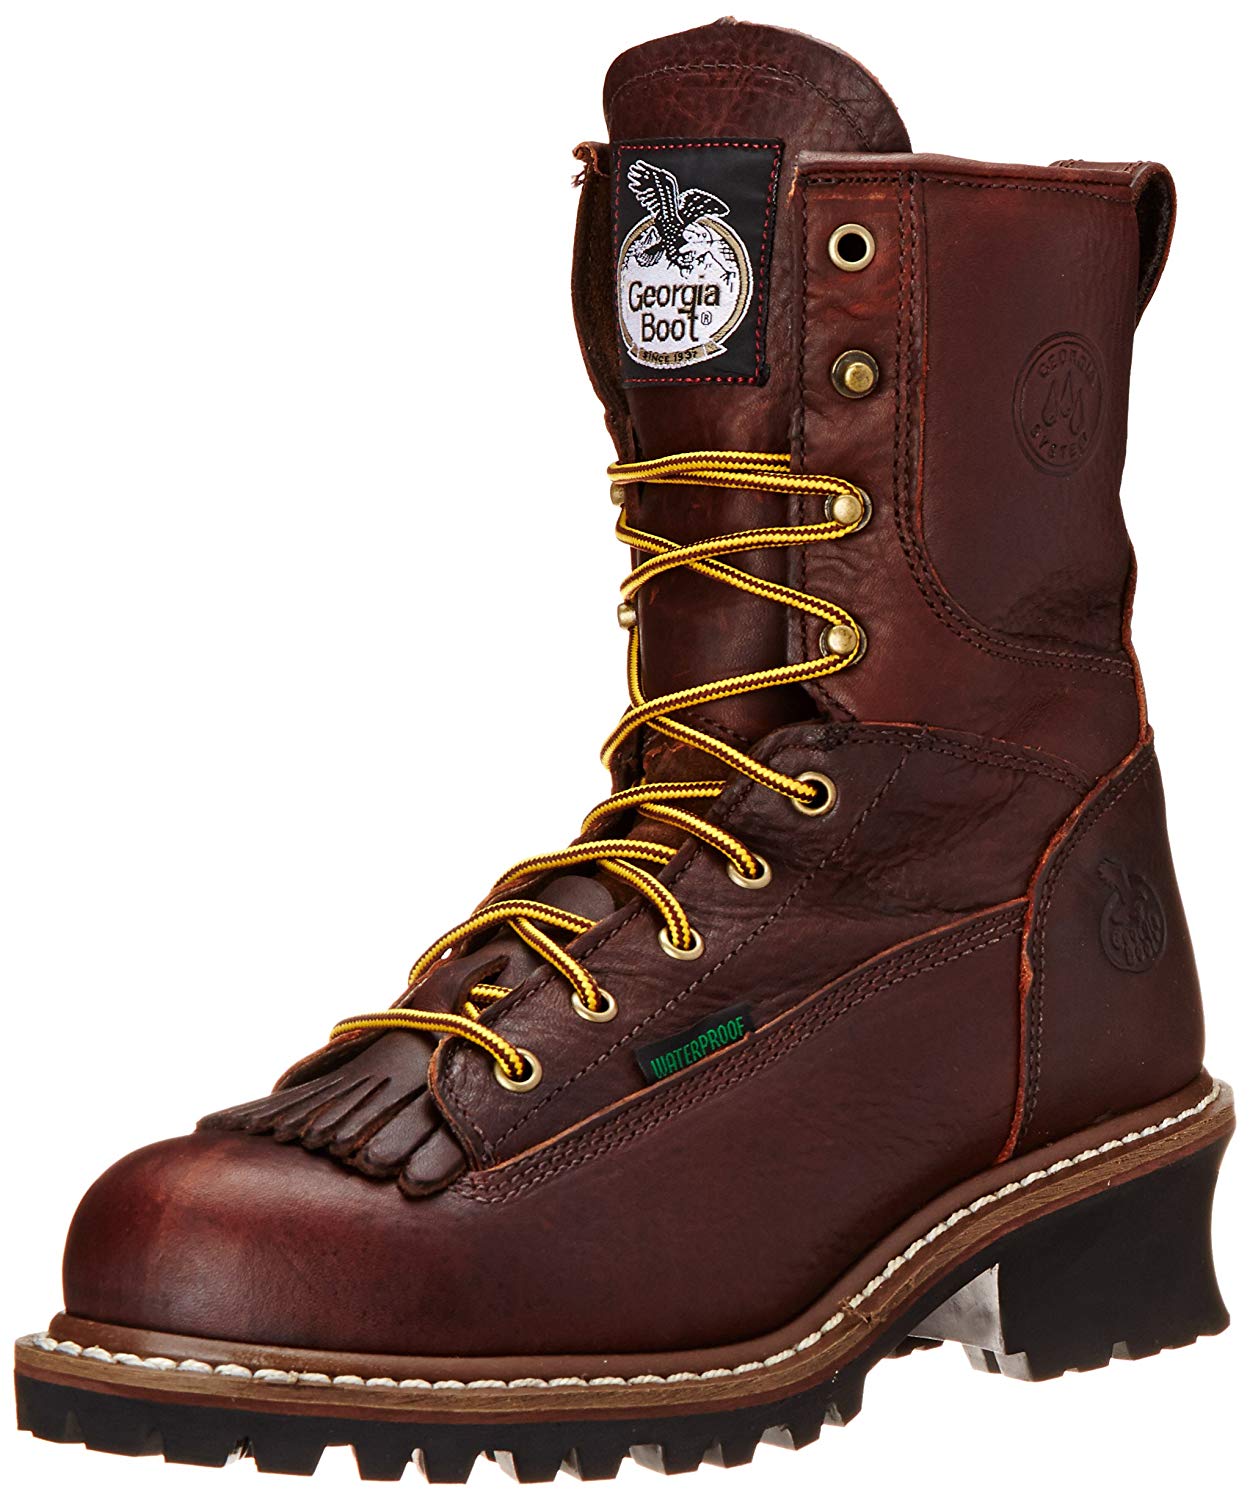 Georgia Boot Men's Loggers G7313 Work Boot, Brown, Size 12.0 vFHg | eBay